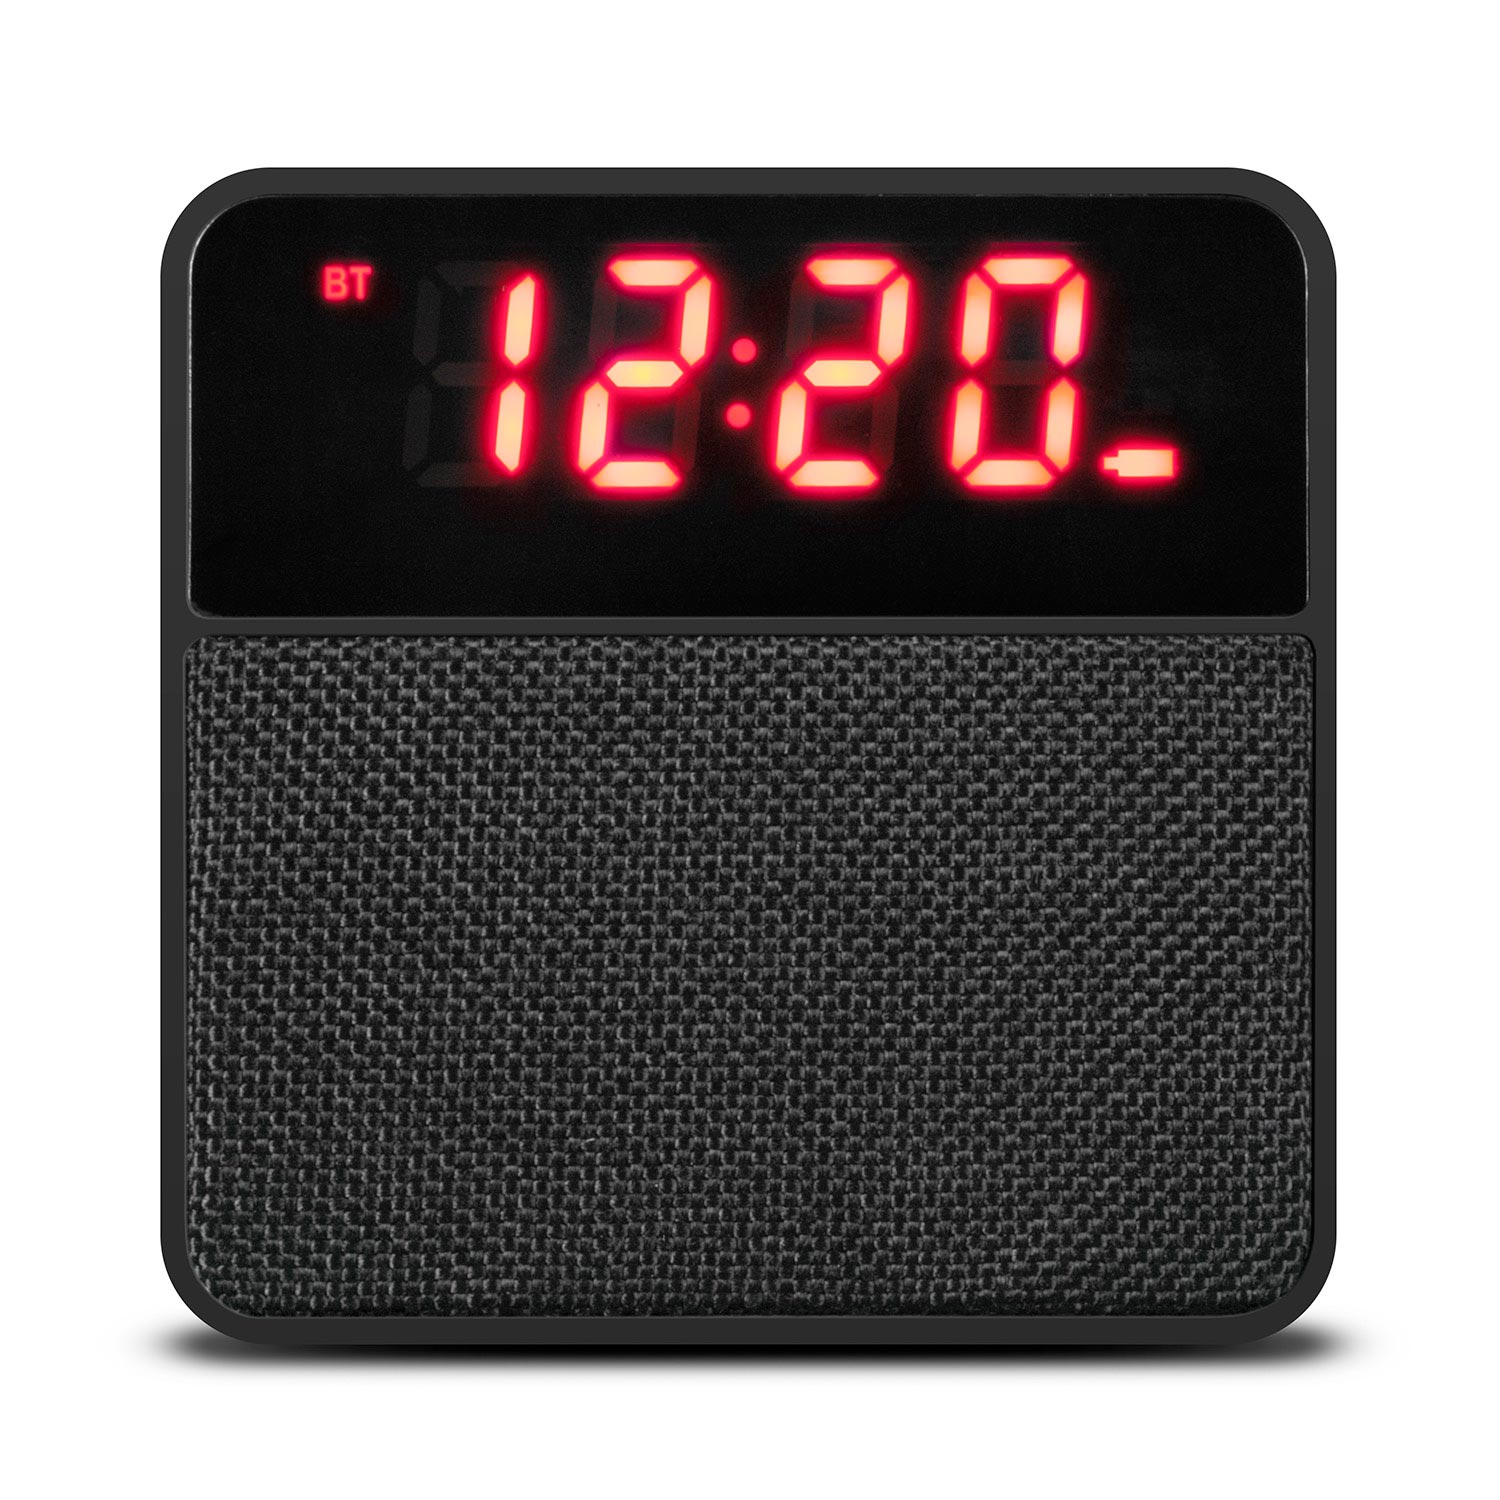 Rádio Relógio Digital Bluetooth c/Alarme CHRONOS - NOVIK NEO